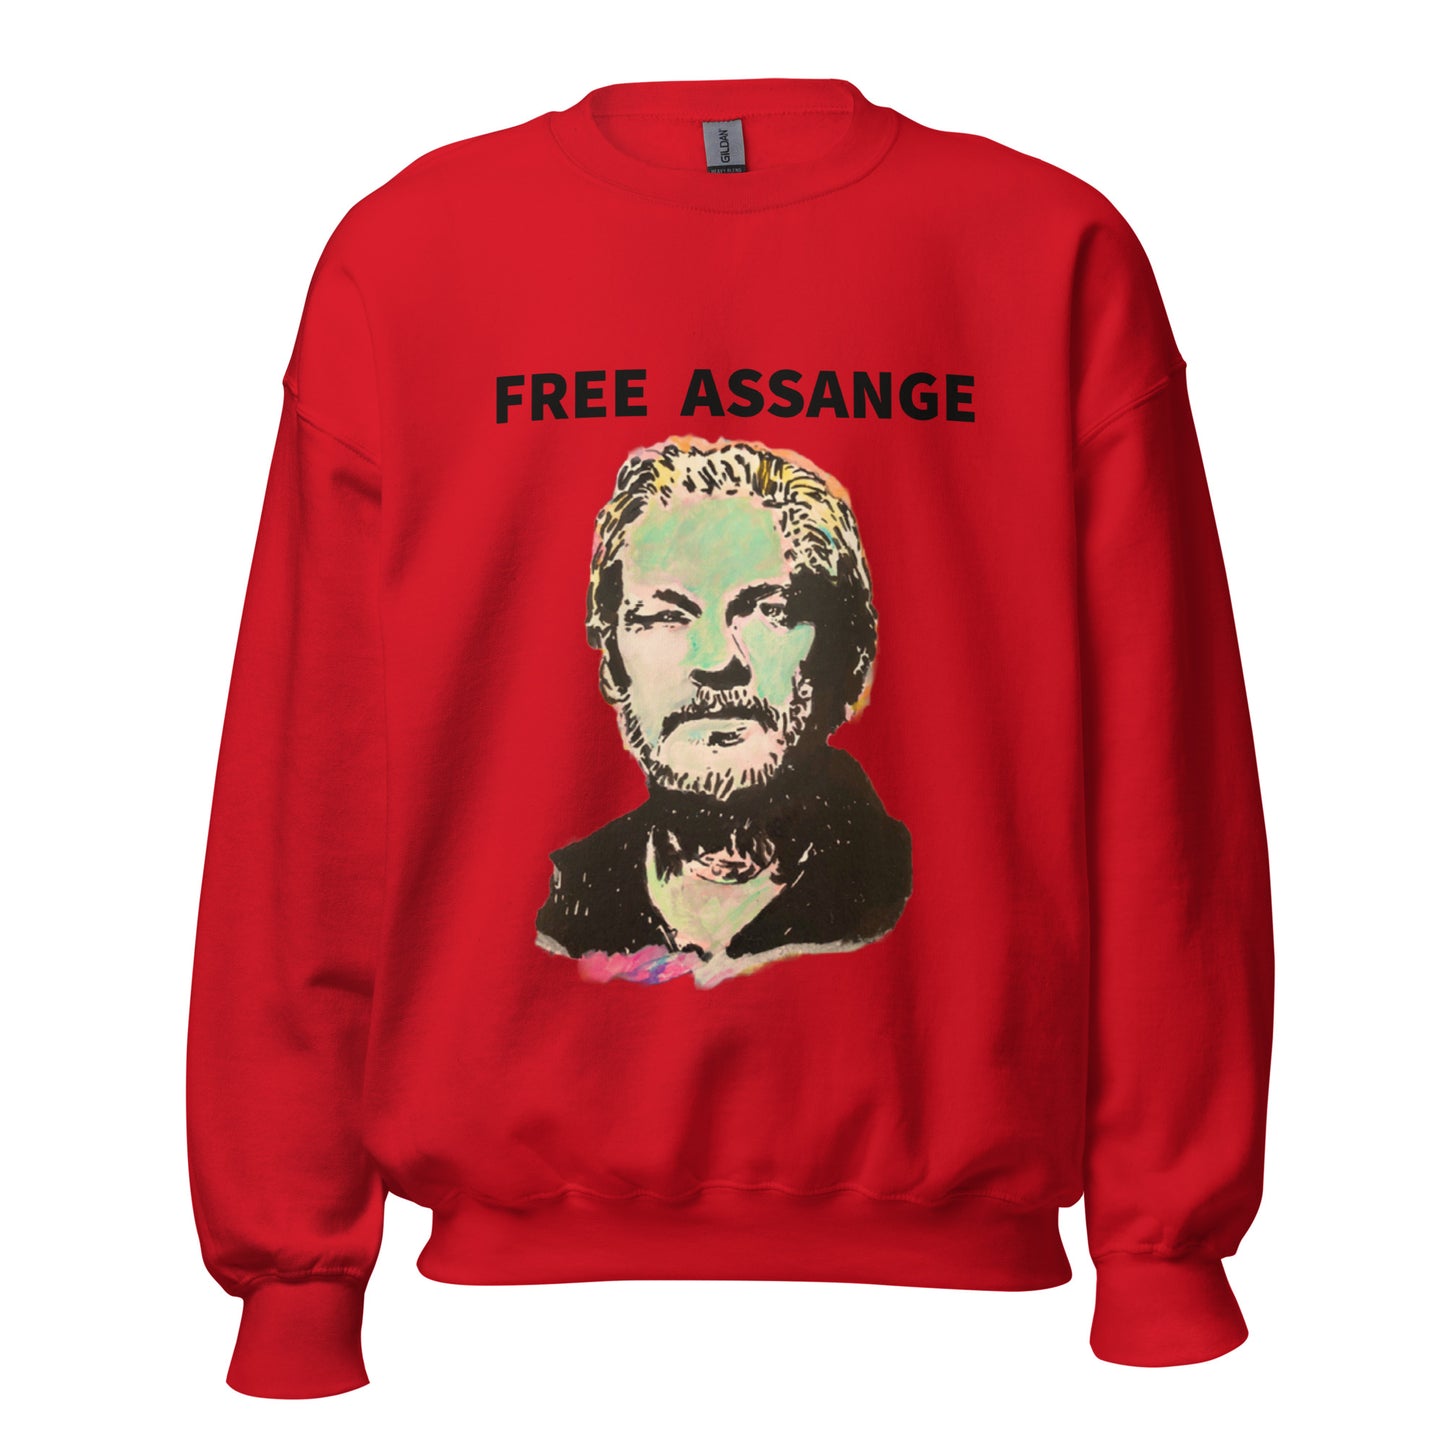 Unisex Sweatshirt "FREE ASSANGE"